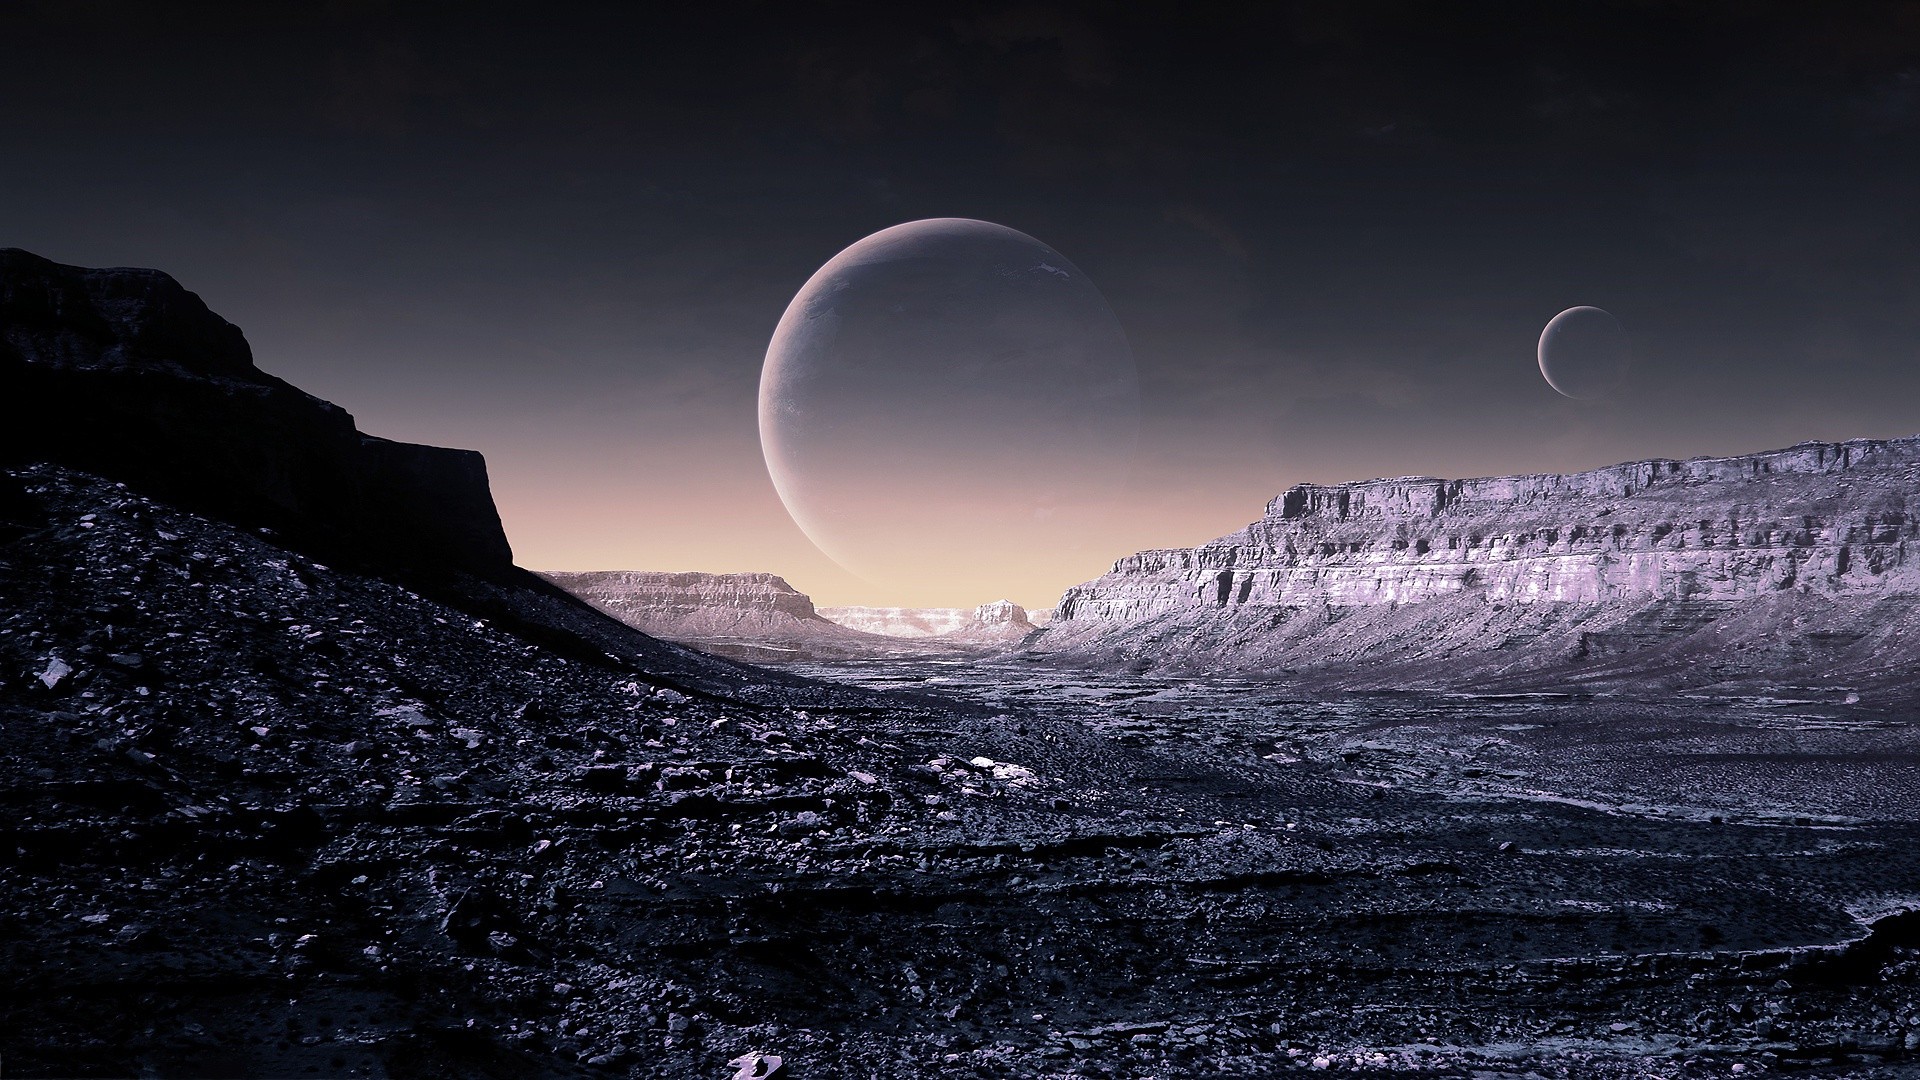  planets surface spacescape science fiction wallpaper background